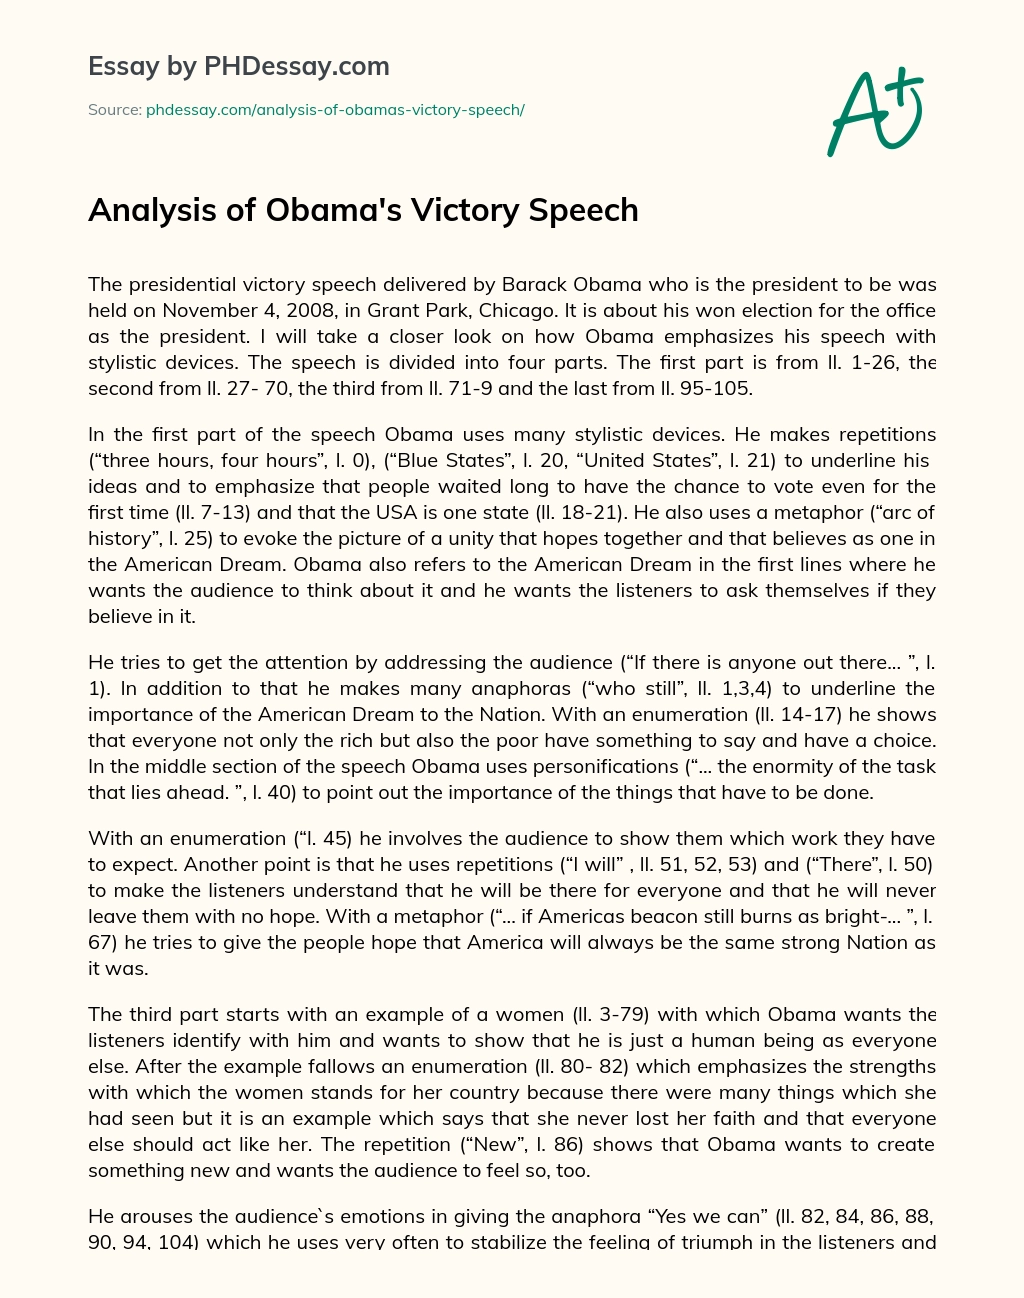 Analysis of Obama’s Victory Speech essay